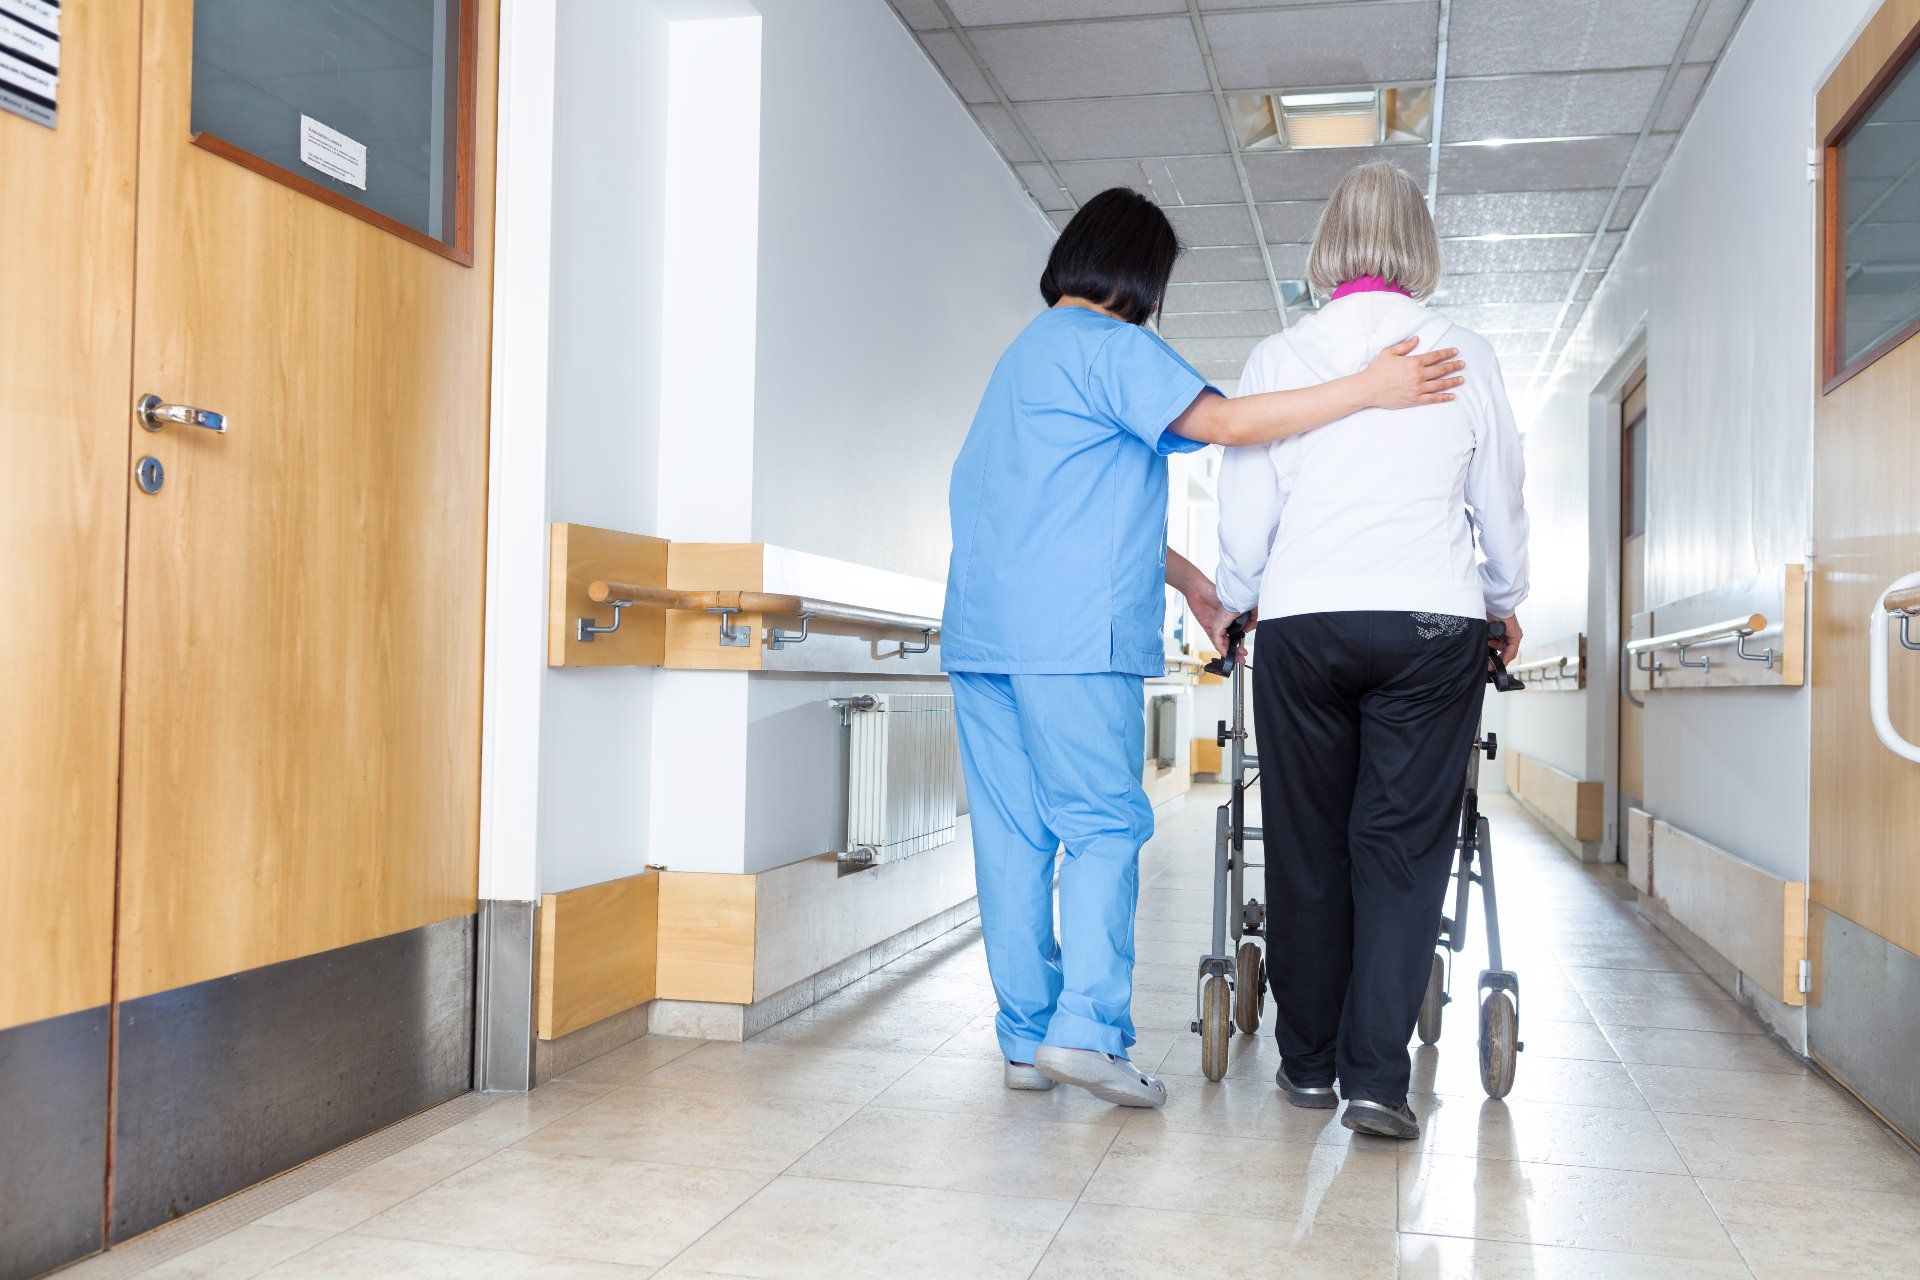 A nurse in blue scrubs helps a patient walk down a hallway at a nursing facility or hospital - Prompt Nursing